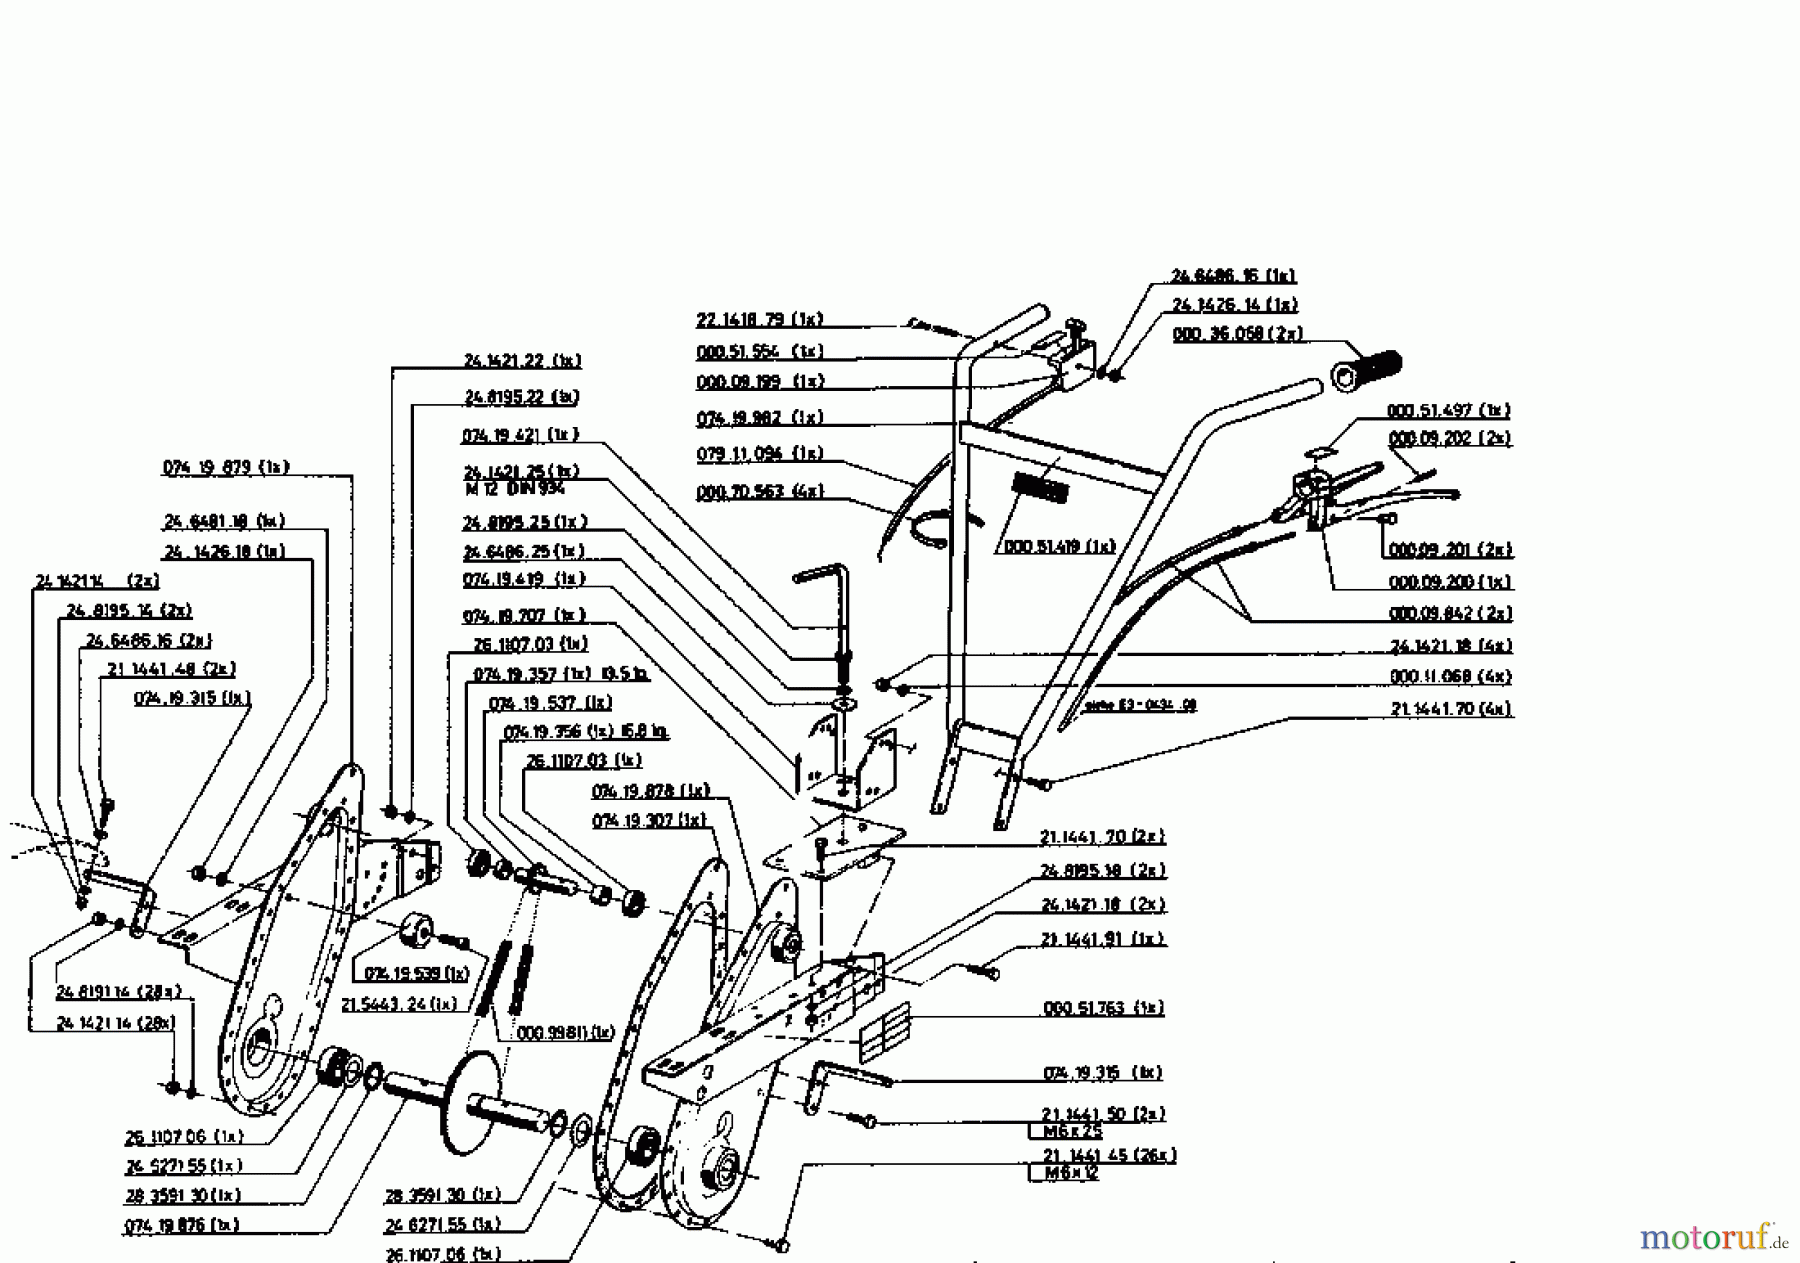  Gutbrod Motorhacken MB 62-52 07518.02  (1995) Grundgerät